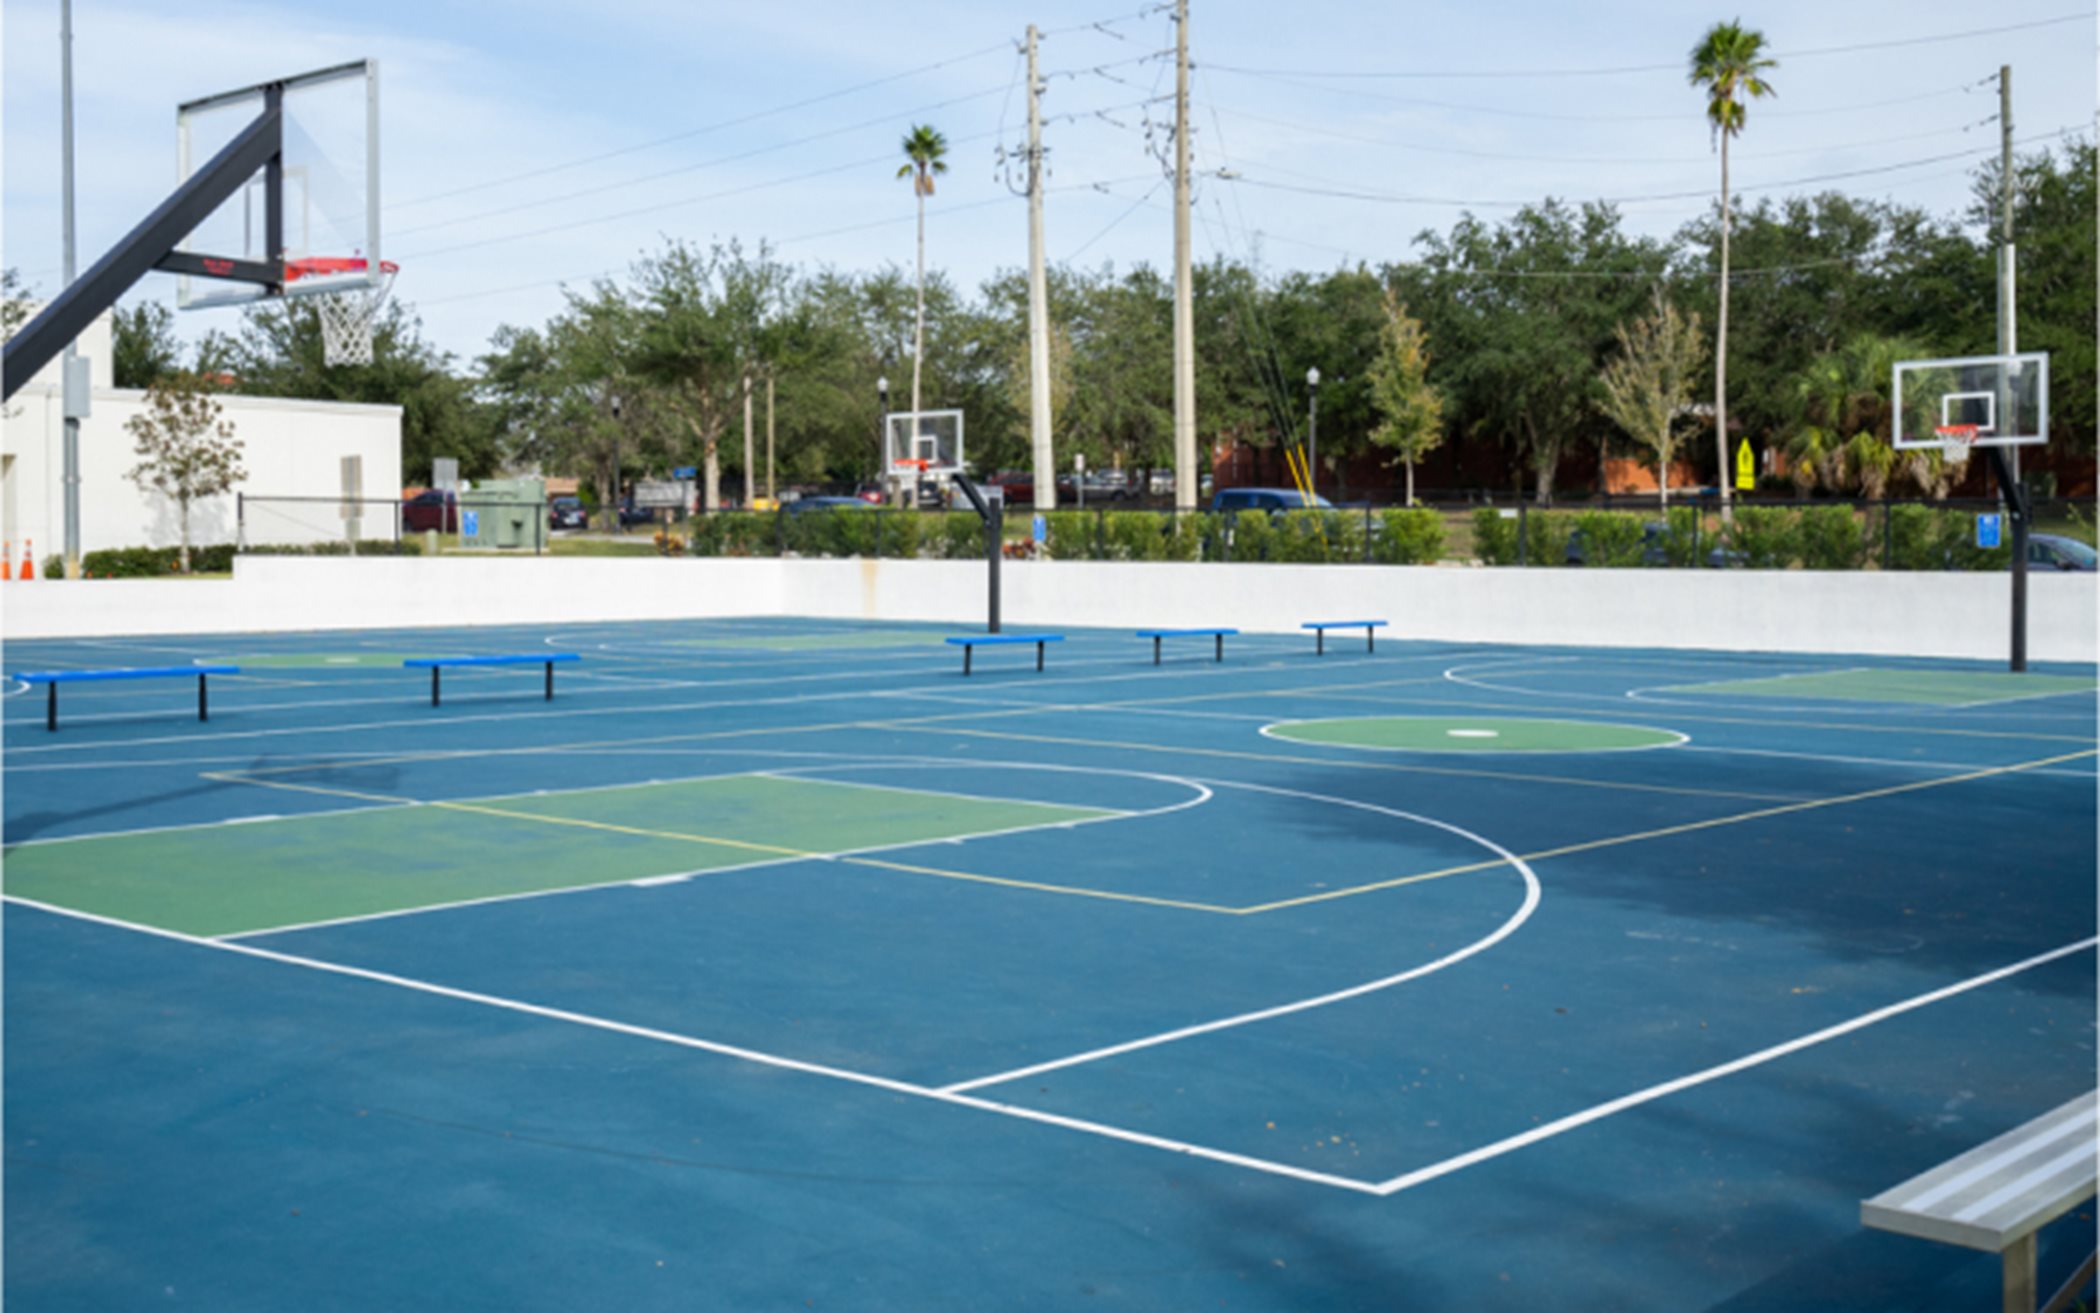 Lake Eva Park Basketball Court